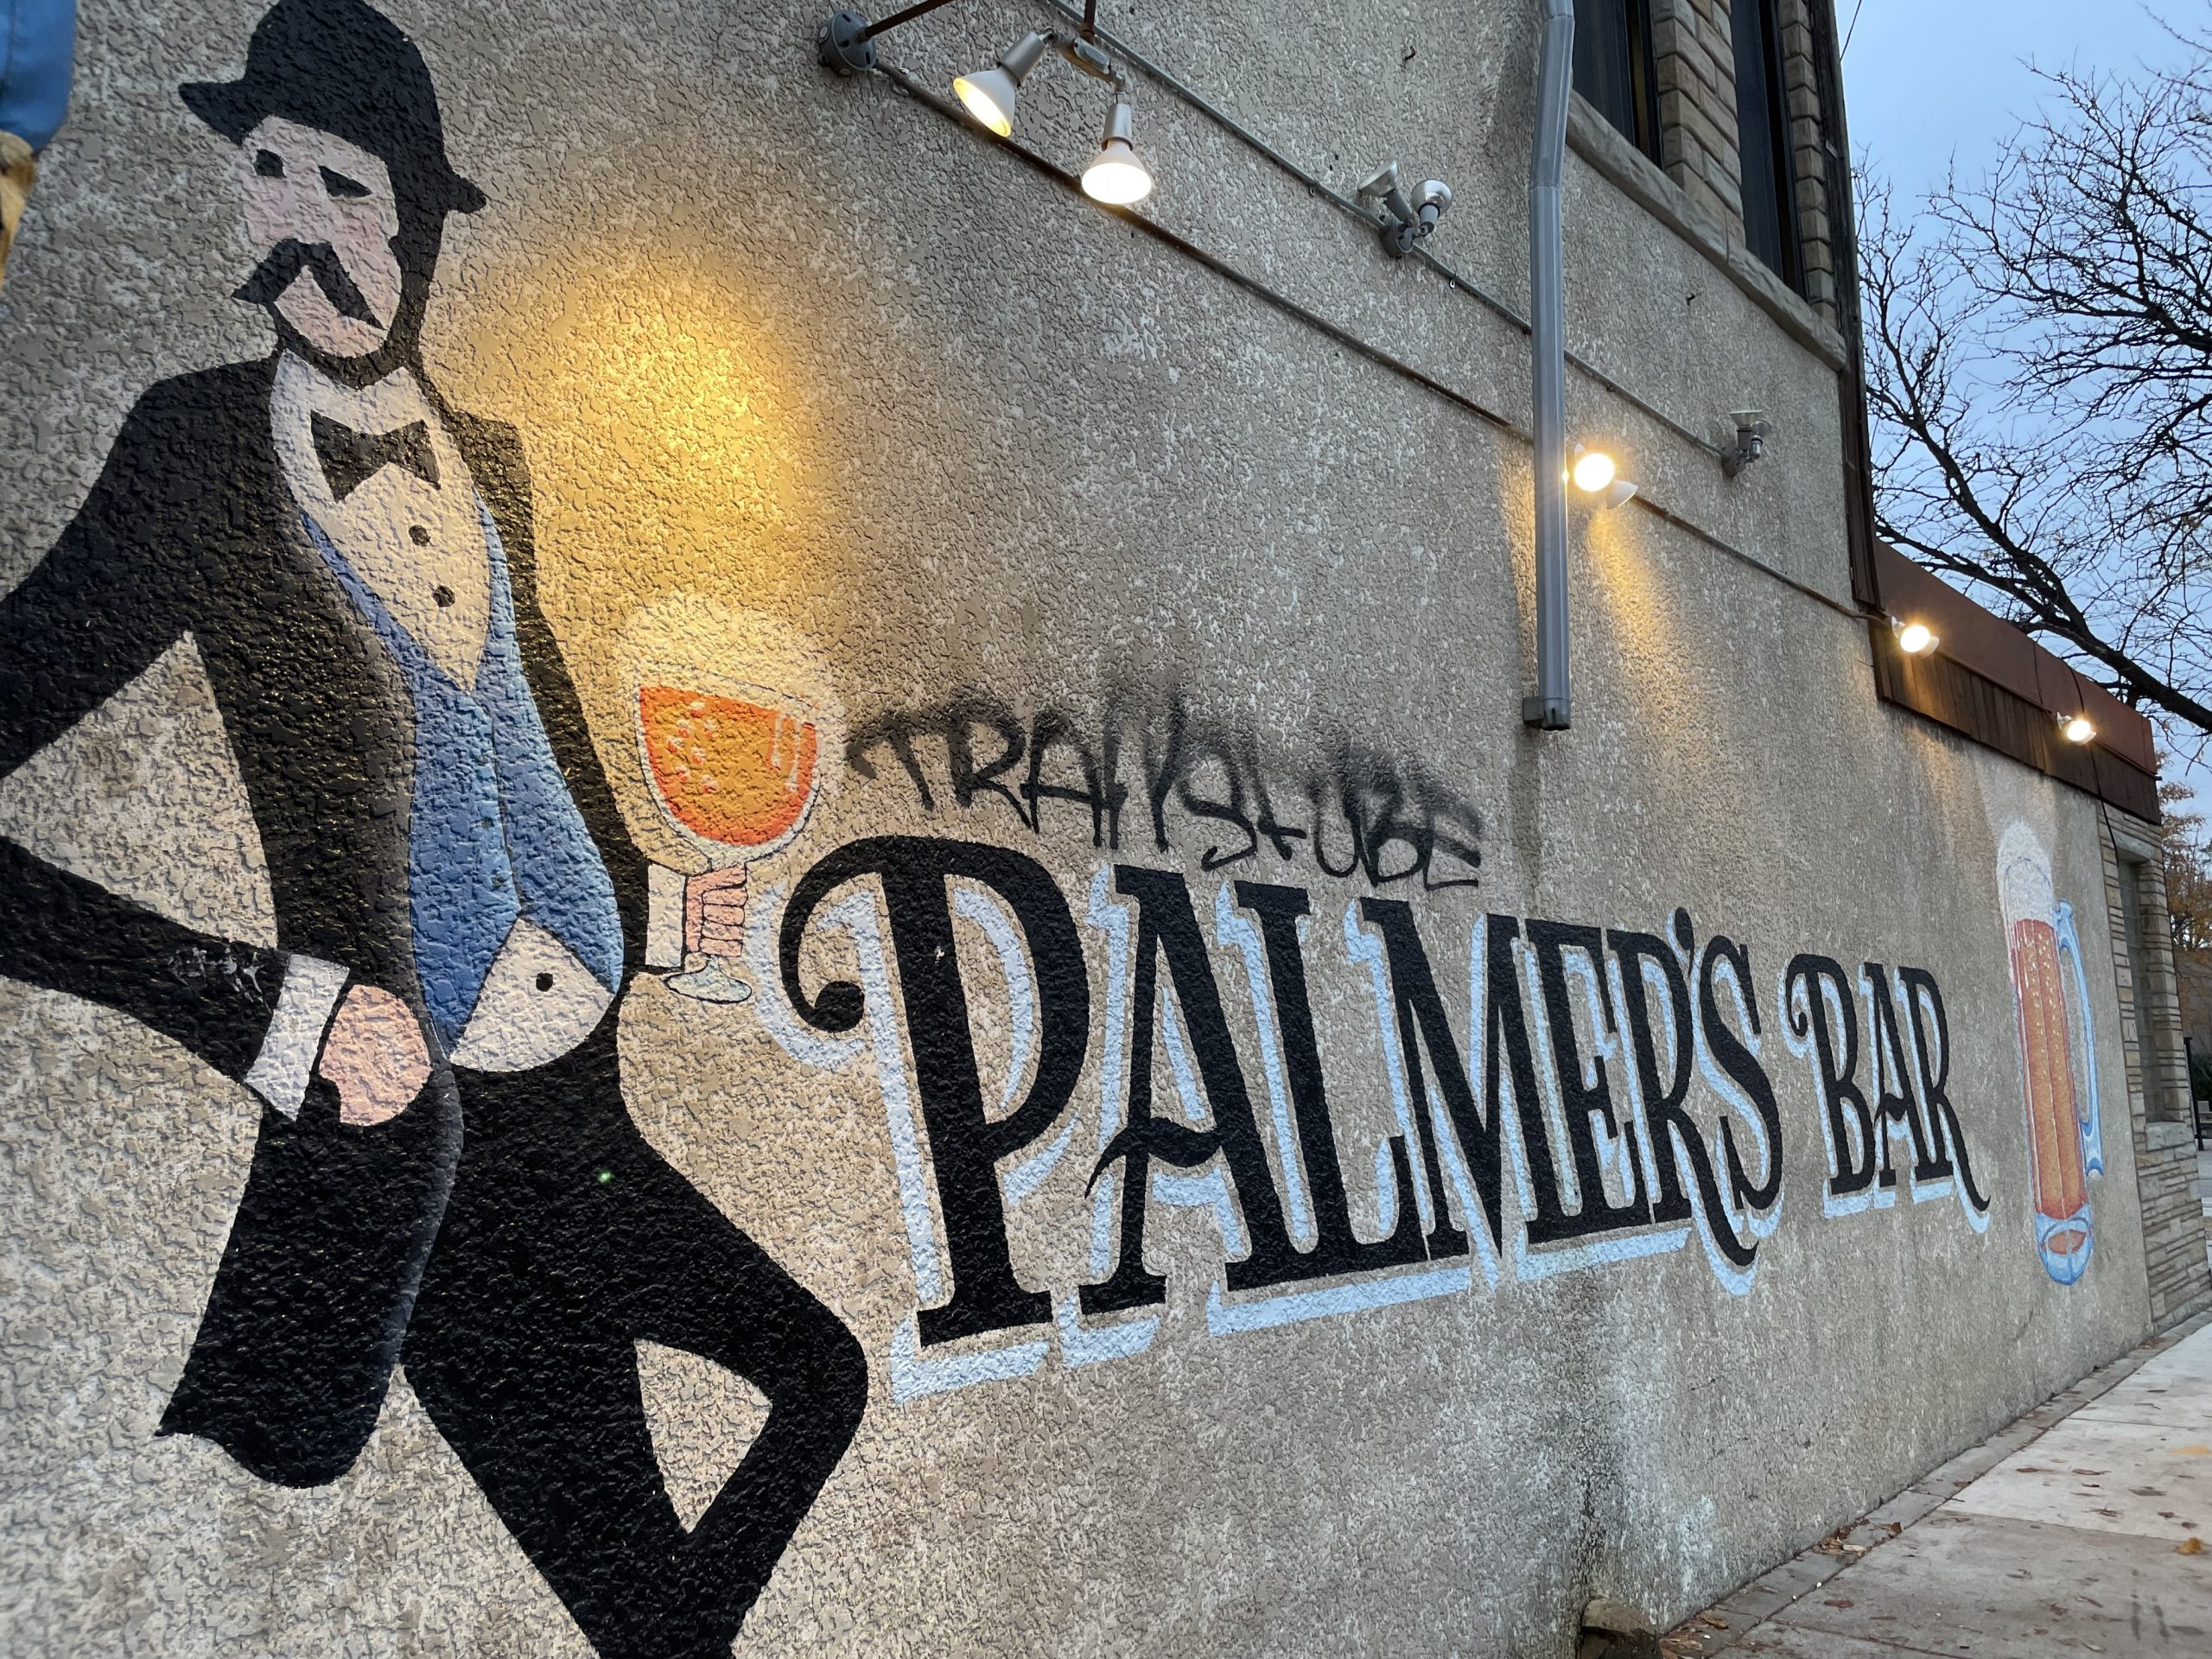 Palmer's Bar - Minneapolis Dive Bar - Outdoor Mural